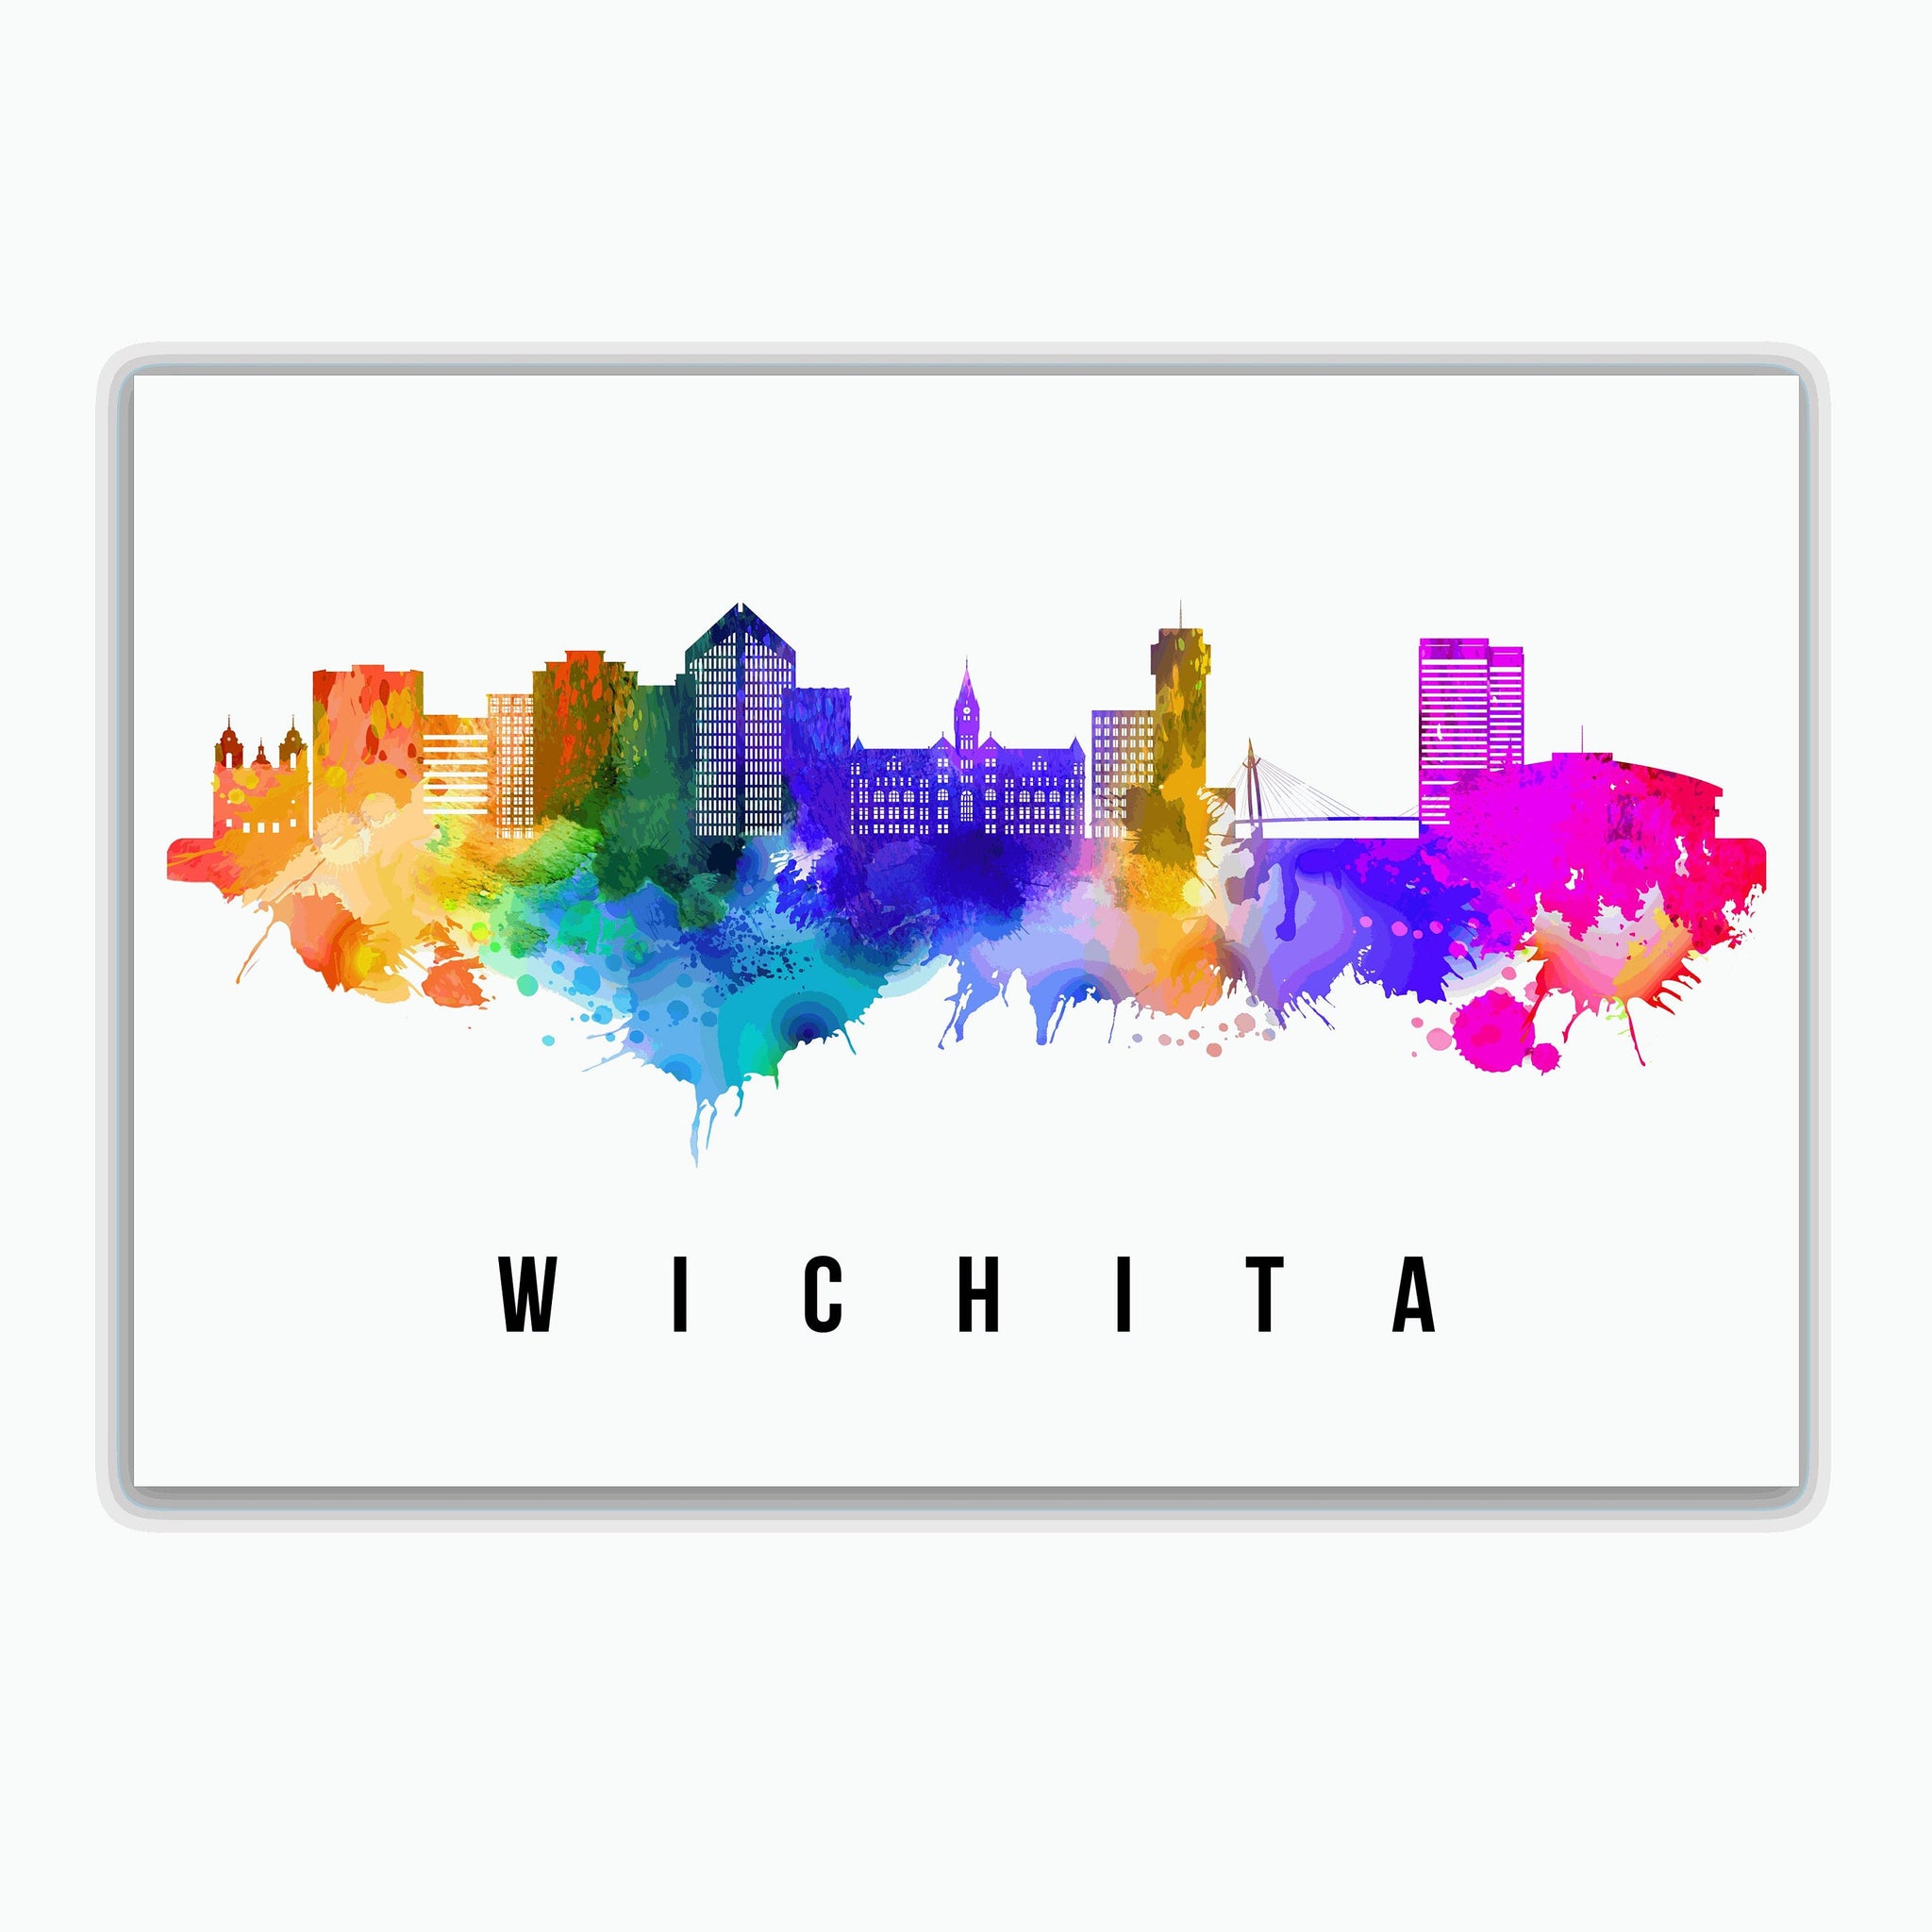 Wichita Skyline Kansas state poster, Kansas Cityscape poster print, Wichita Kansas poster, Kansas state landmark poster print, Home wall art